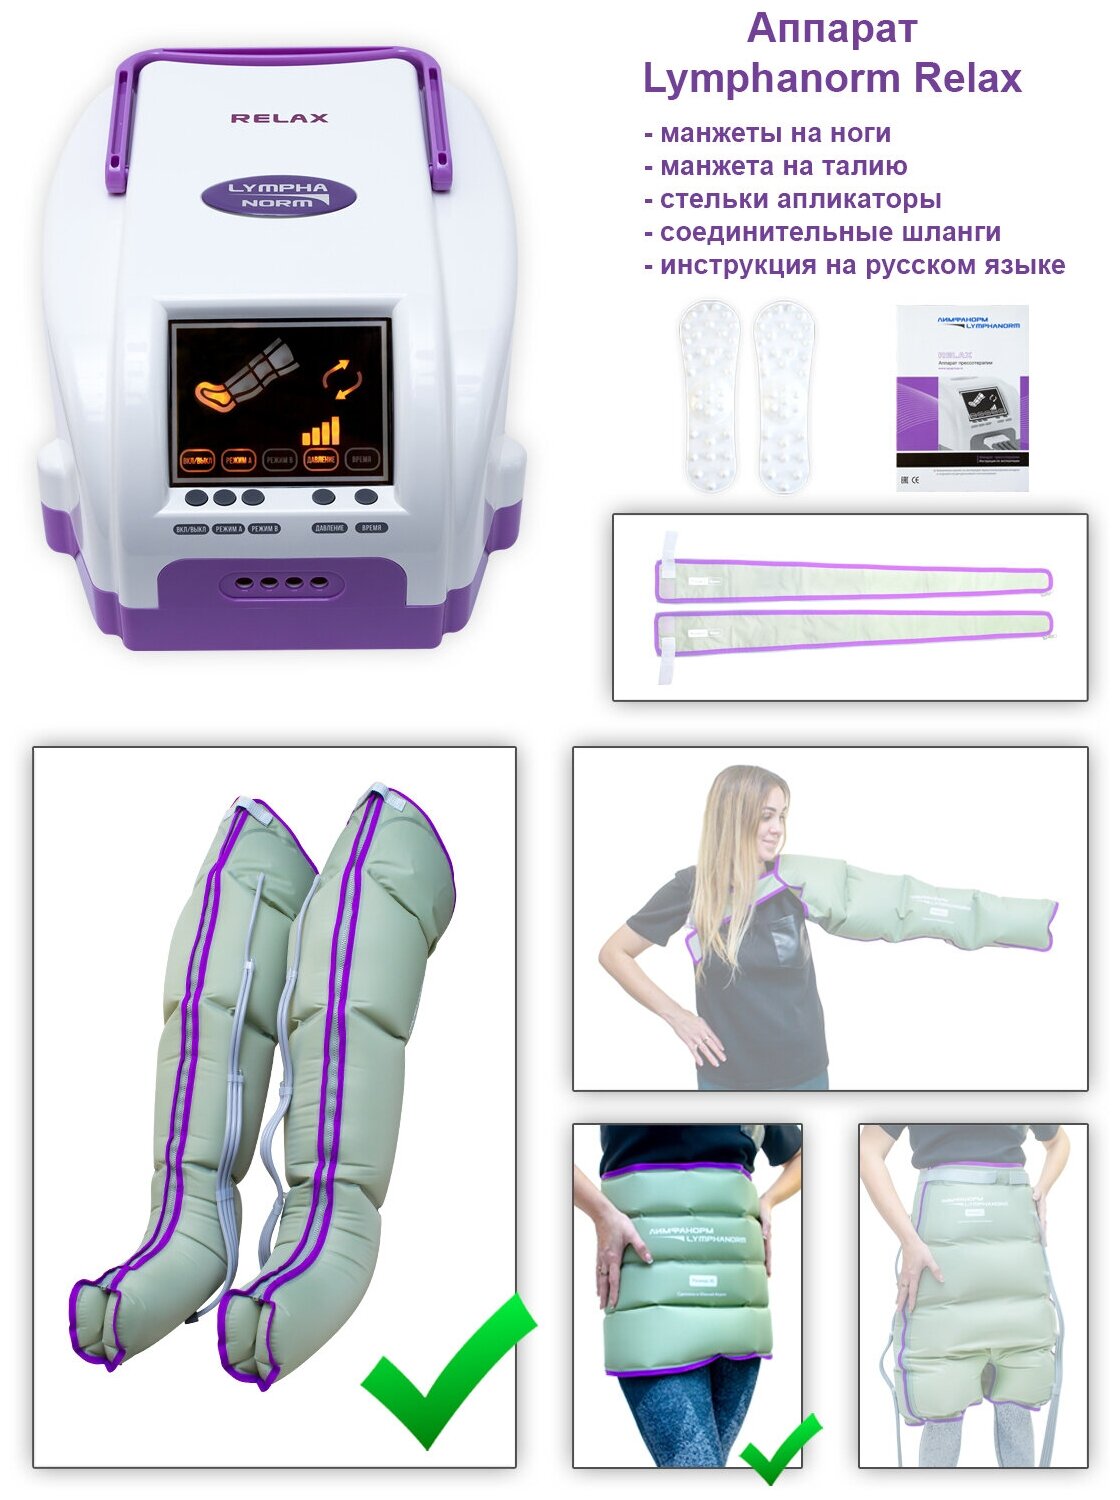 Аппарат для лимфодренажа и прессотерапии LymphaNorm RELAX в комплекте с манжетами на ногу (размер L) + манжета-пояс (размер XL)